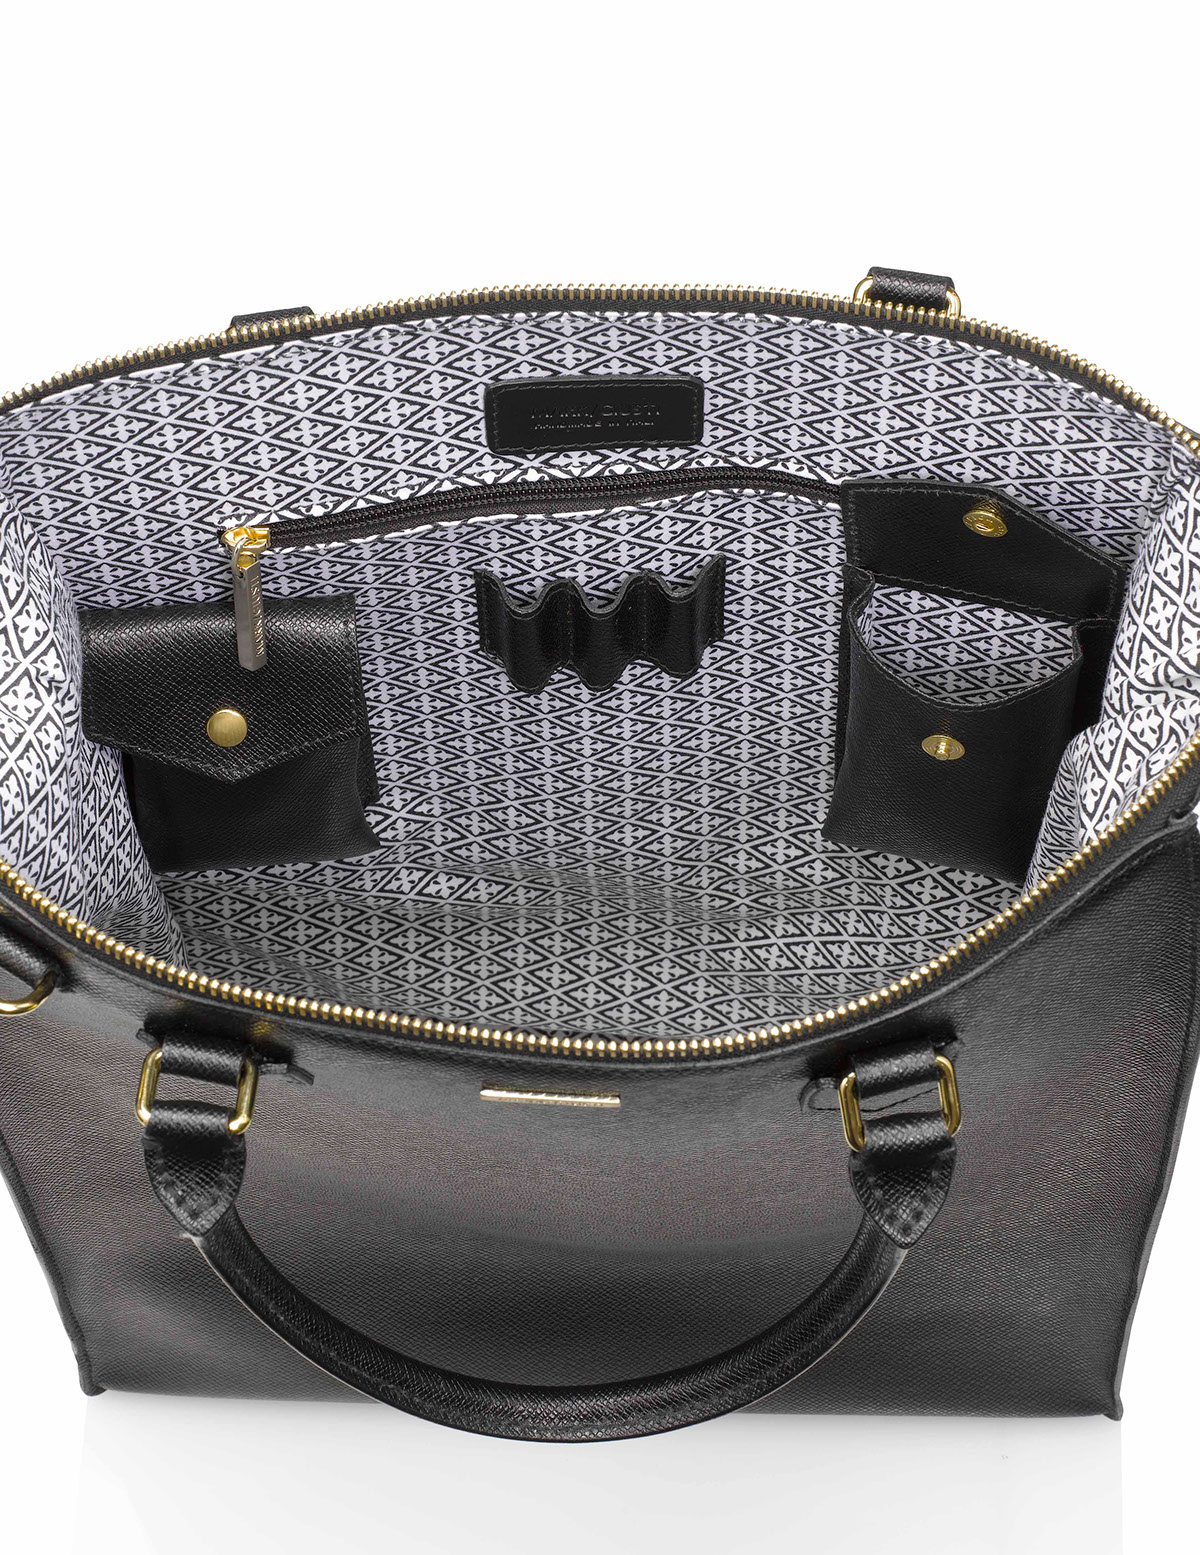 luxury bags leather accessories craftsmanship handmade in Italy MARK/GIUSTI LA DOLCE VITA Quality men